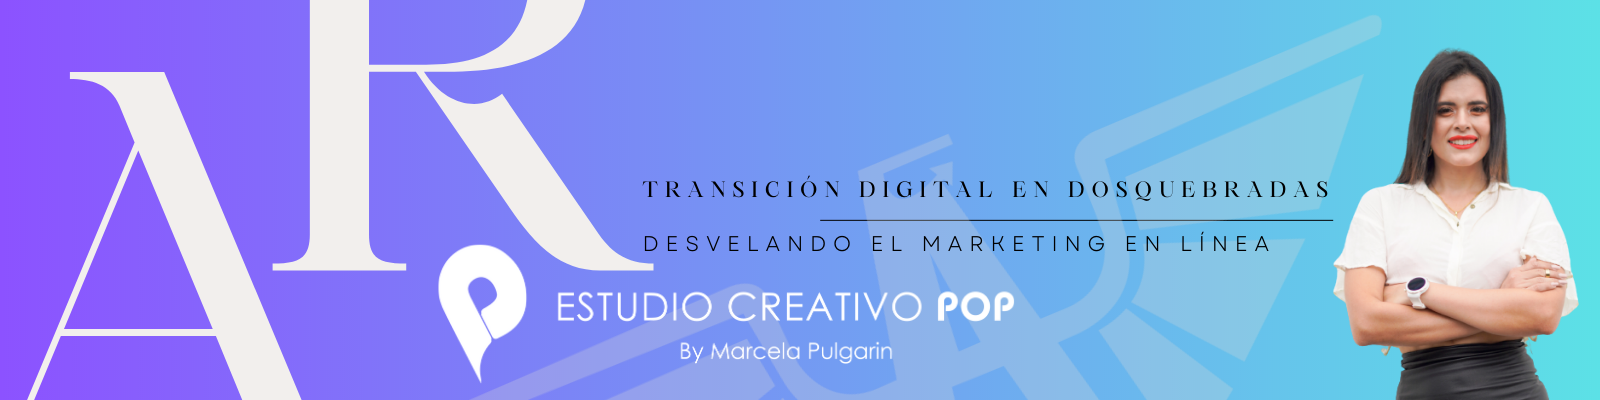 transicion digital clases de marketing digital andrea romero